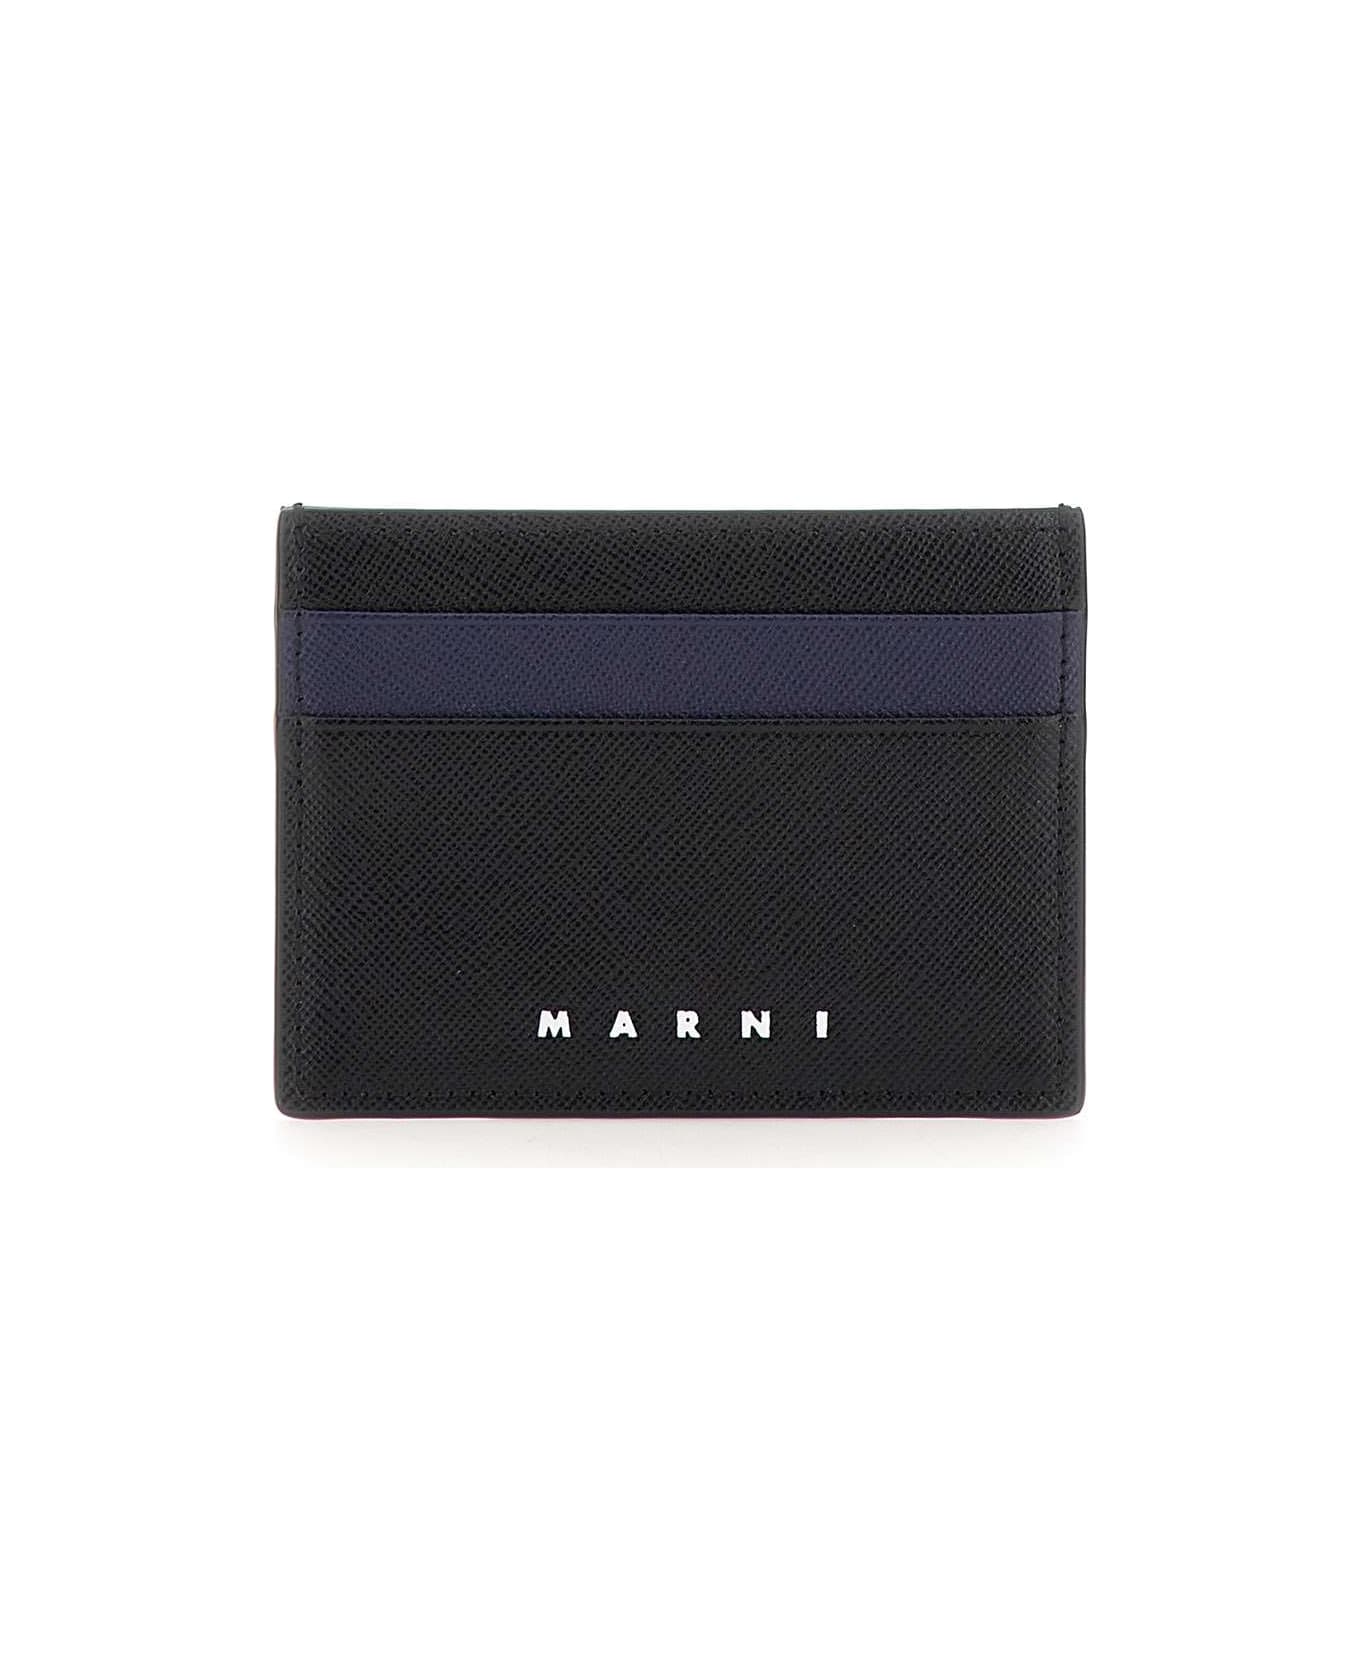 Marni 'cc Holder' Leather Card Holder - BLACK/BLUBLACK 財布